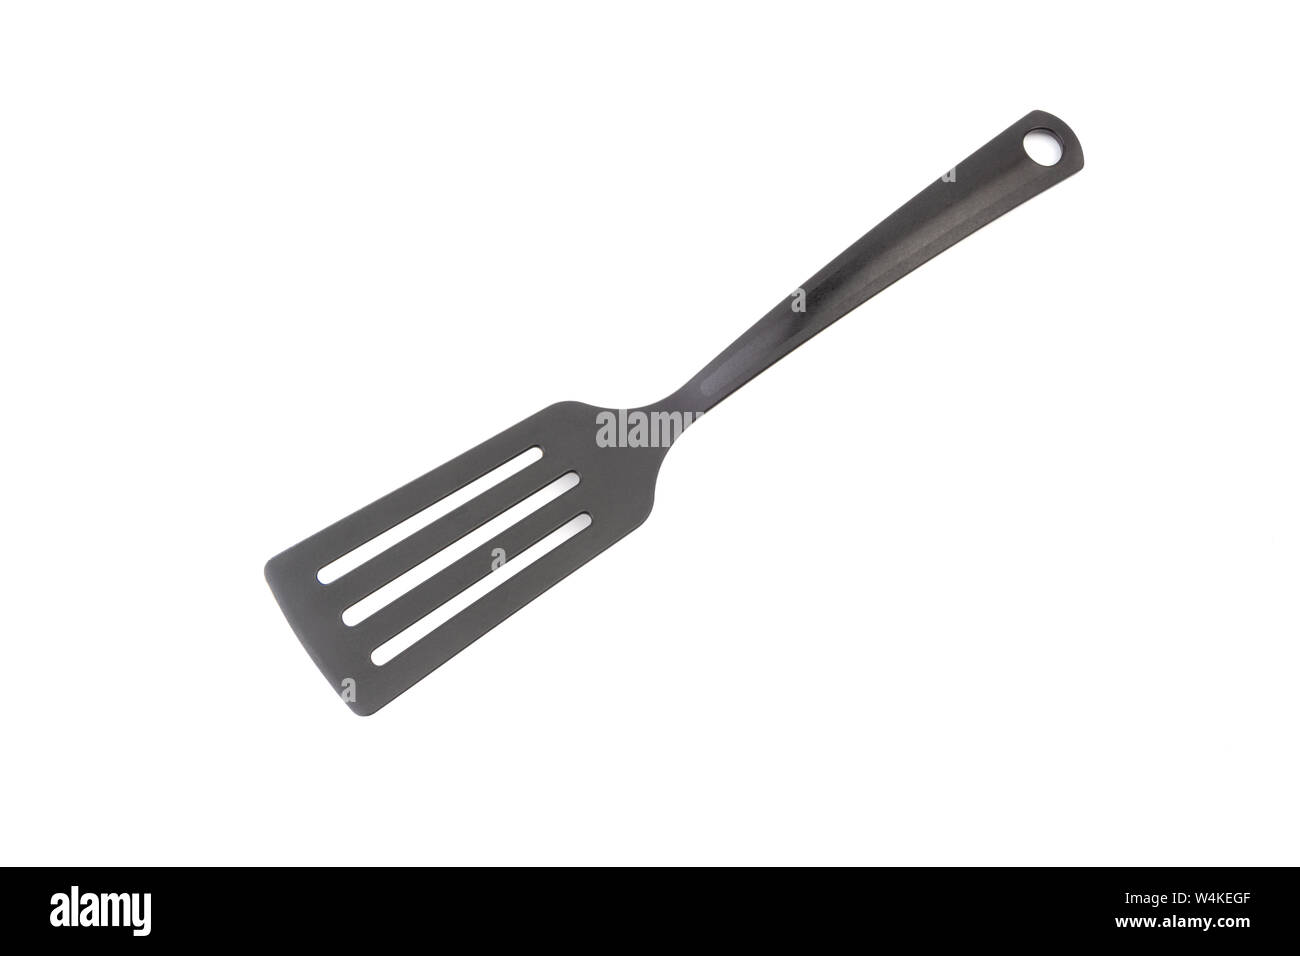 https://c8.alamy.com/comp/W4KEGF/black-kitchen-spatula-utensils-or-kitchenware-closeup-isolated-on-white-background-W4KEGF.jpg